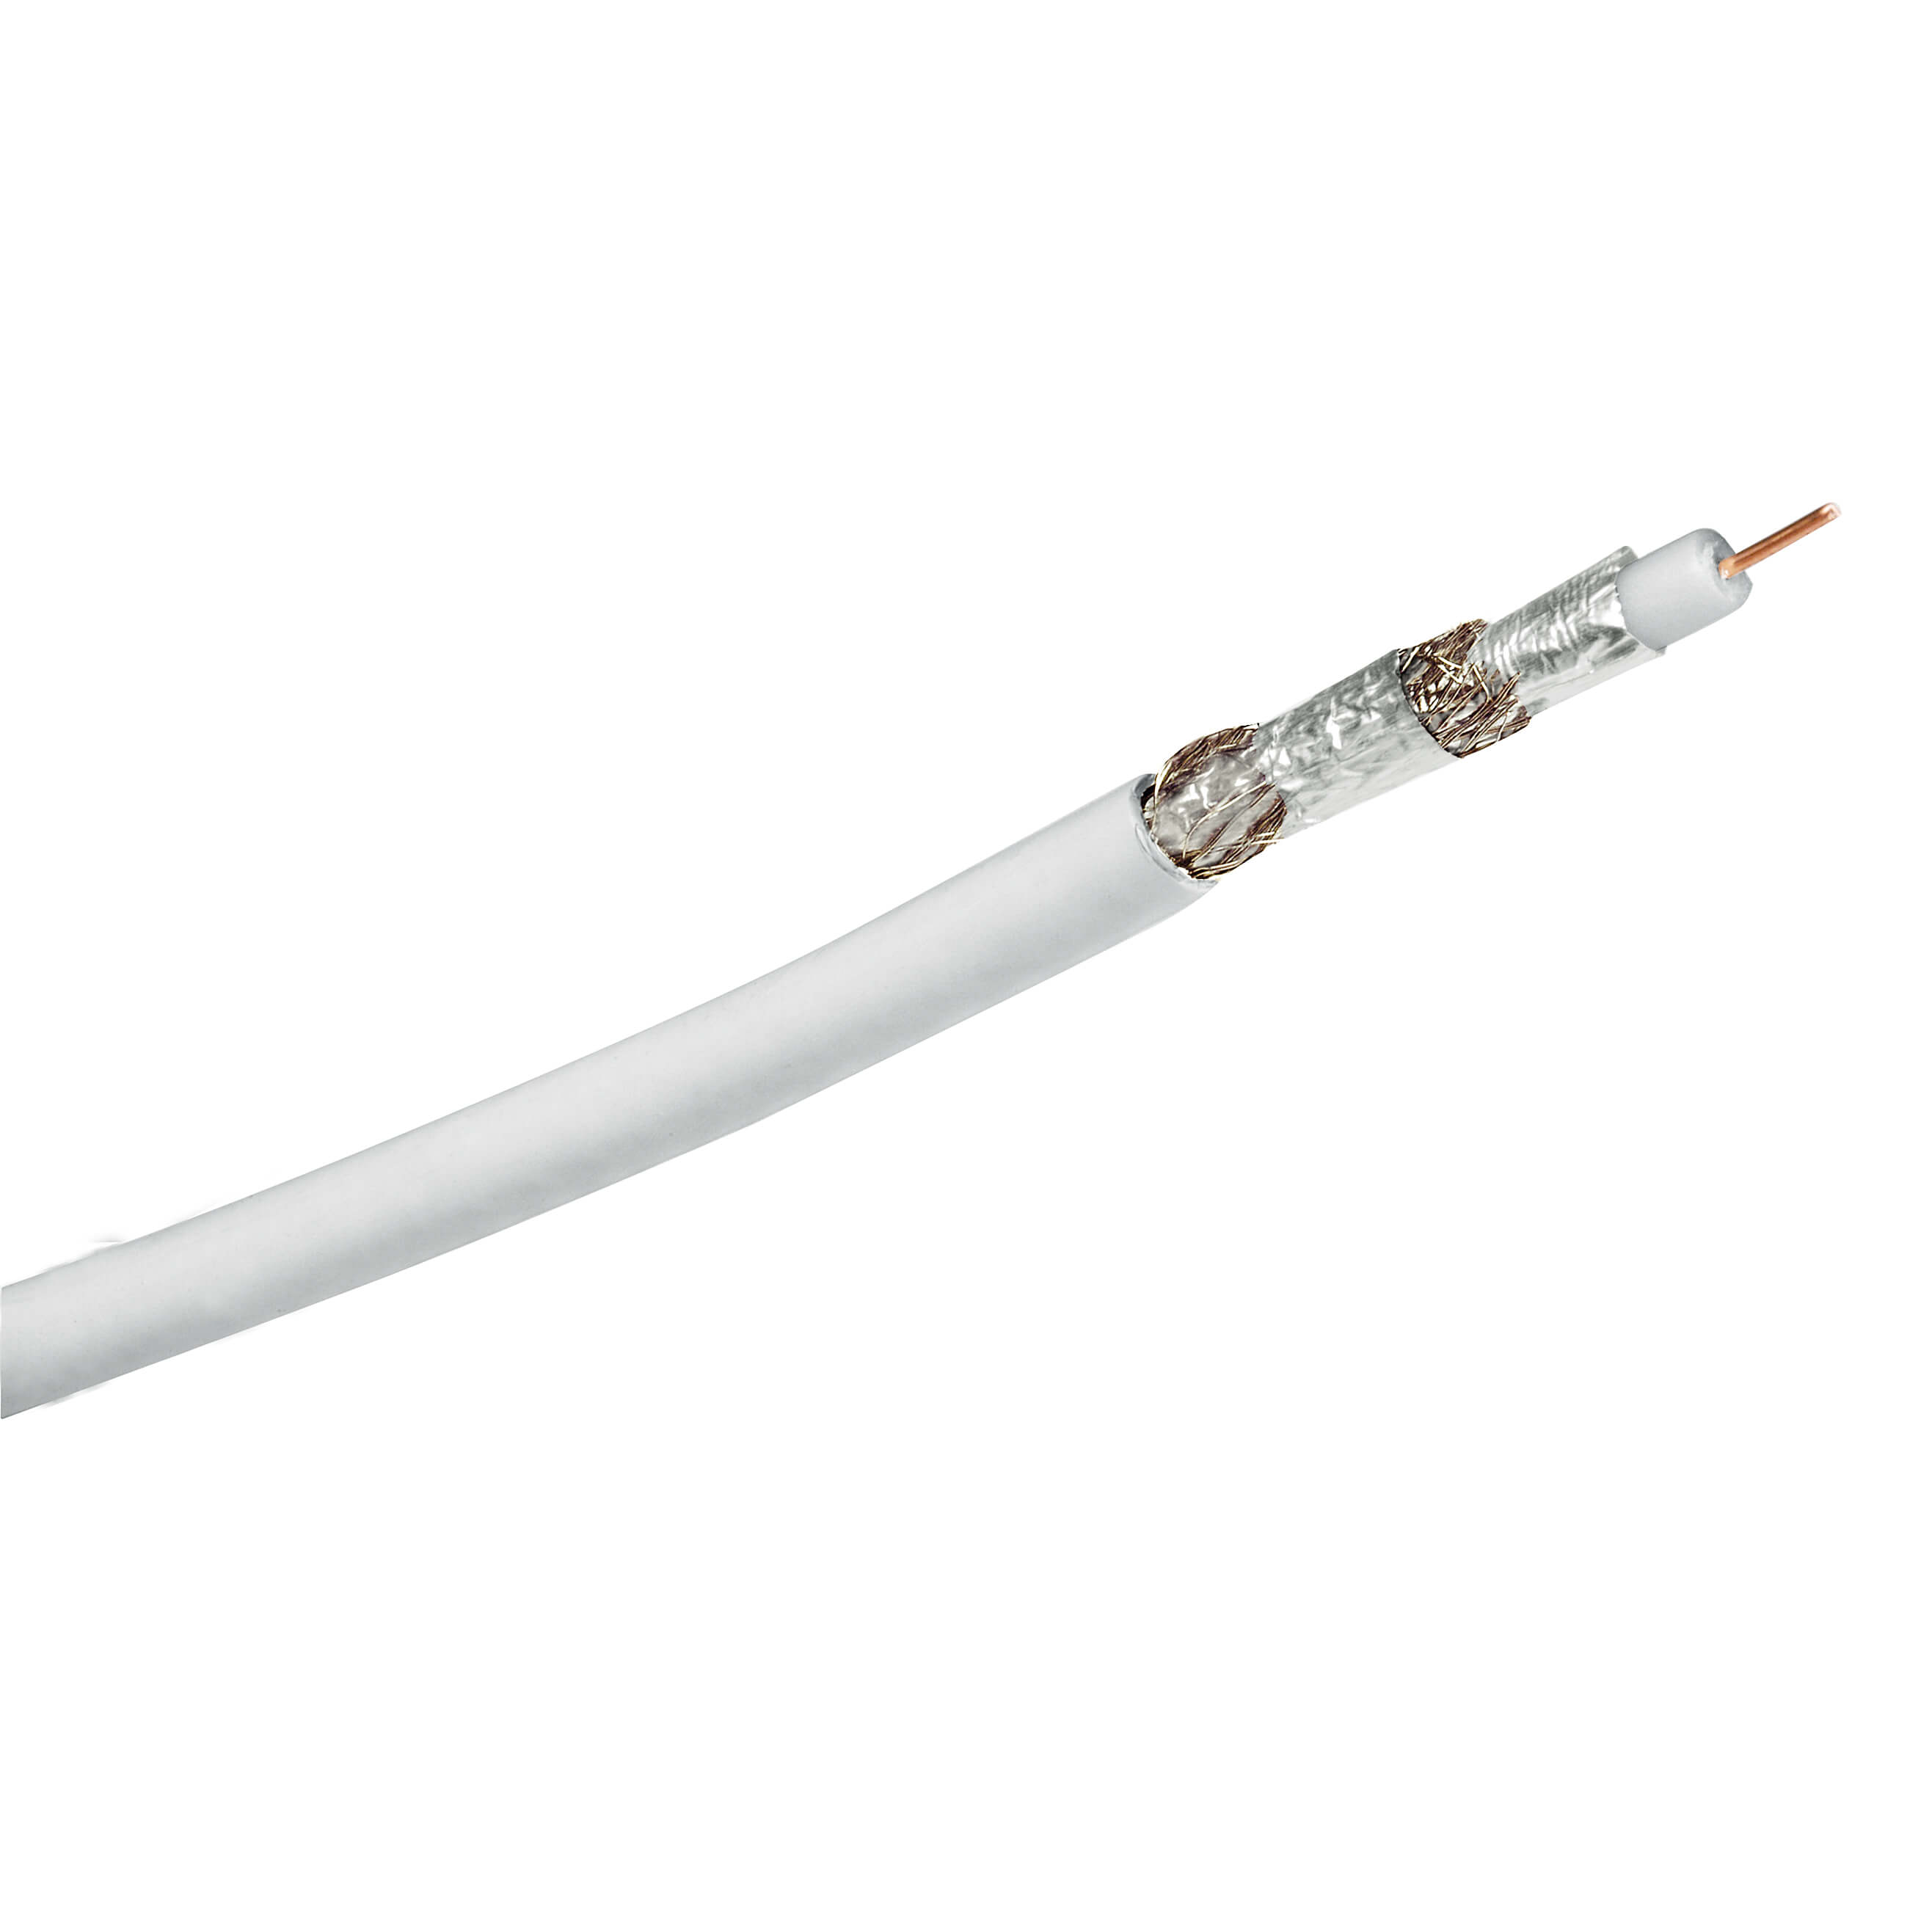 SAT/BK Coaxial Cable, 120 dB, 100 m, white